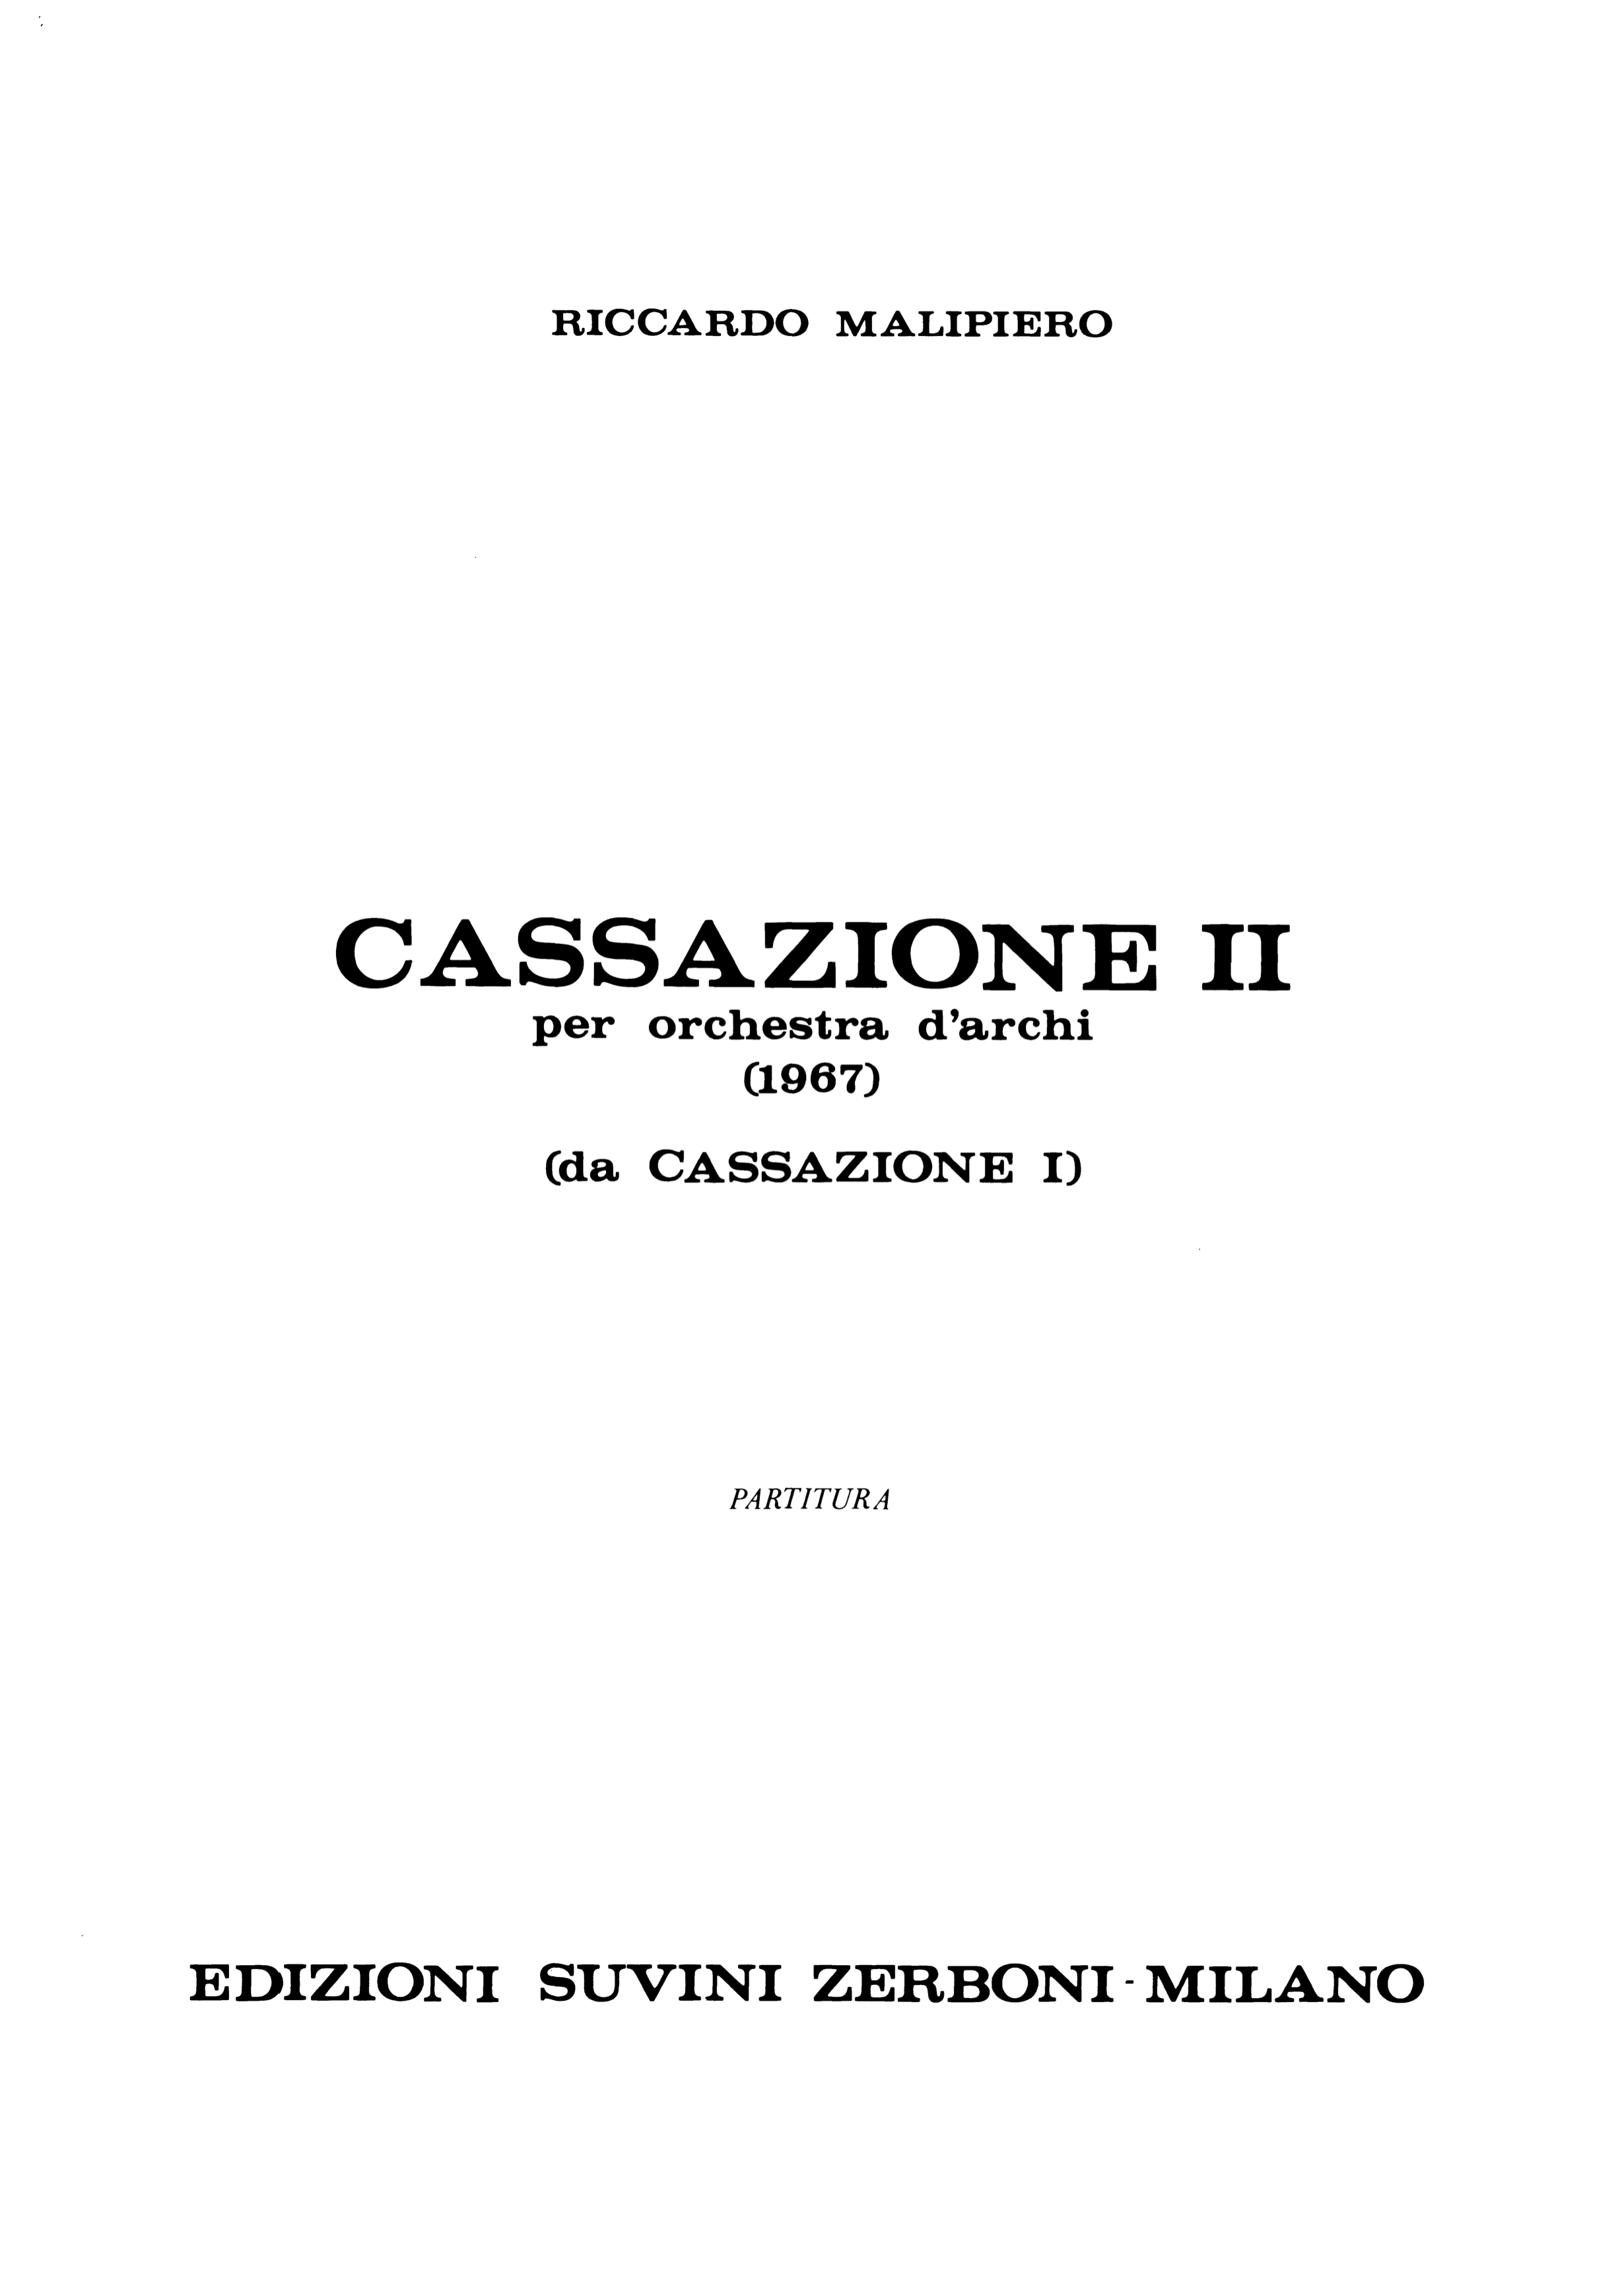 Cassazione II_Malipiero Riccardo 1